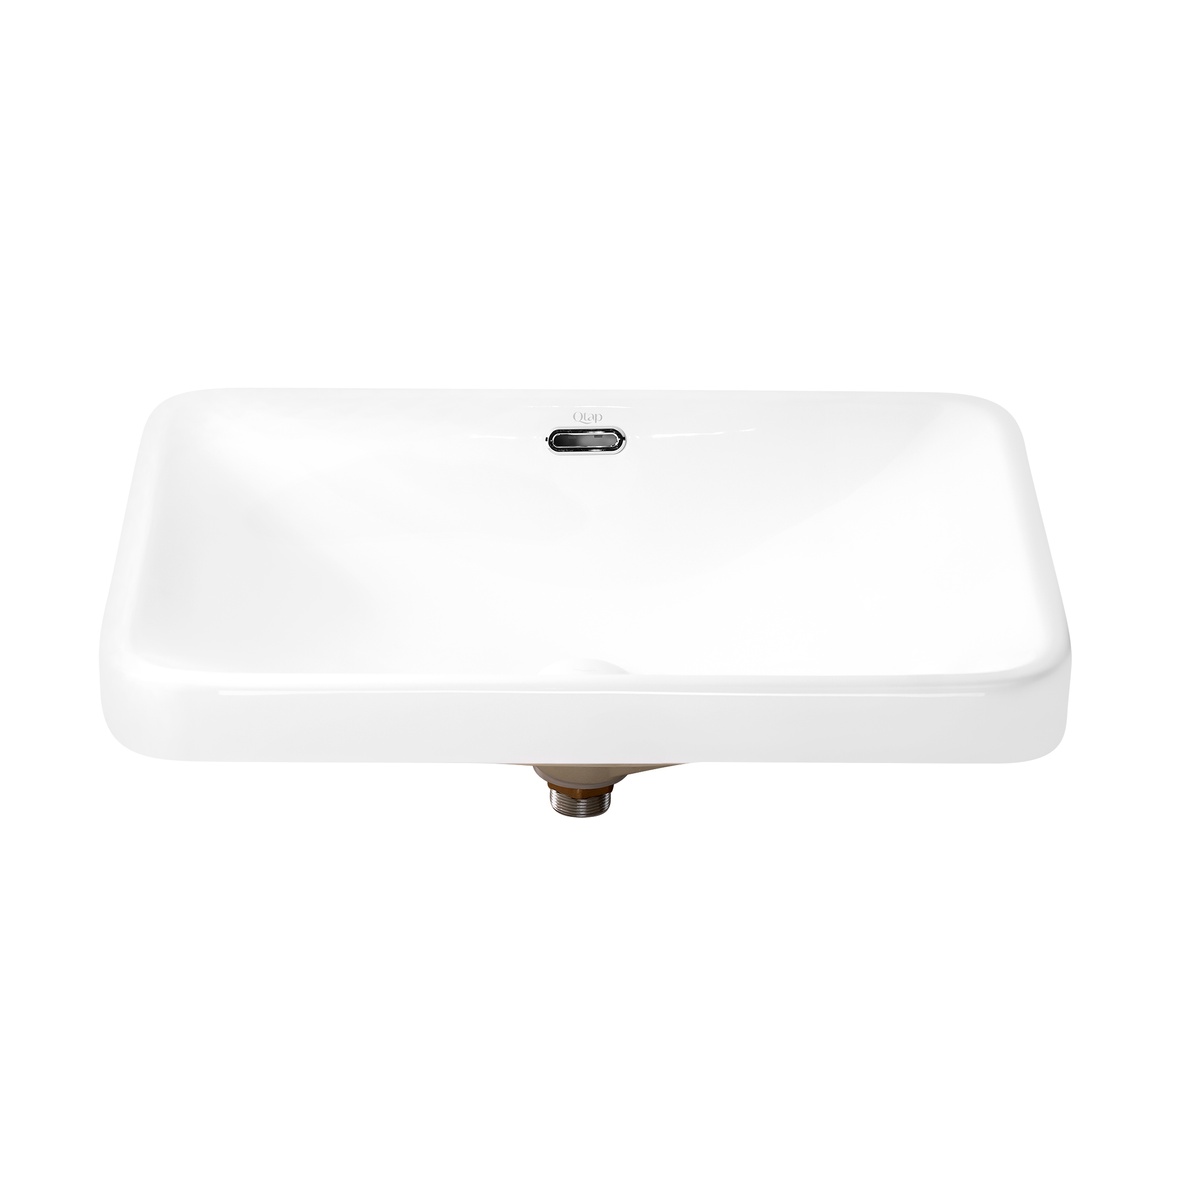 Раковина врезная в ванную на столешницу 590мм x 405мм Q-TAP Jay белый прямоугольная QT0711K306W